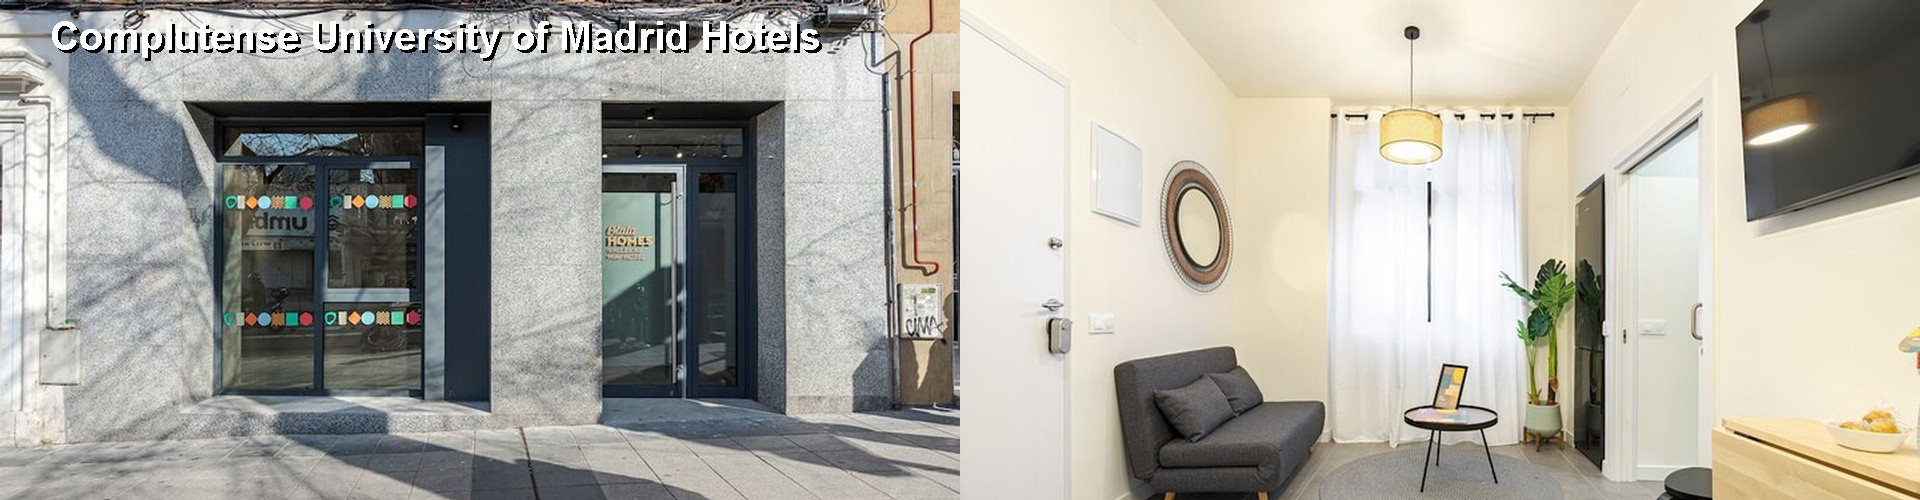 5 Best Hotels near Complutense University of Madrid